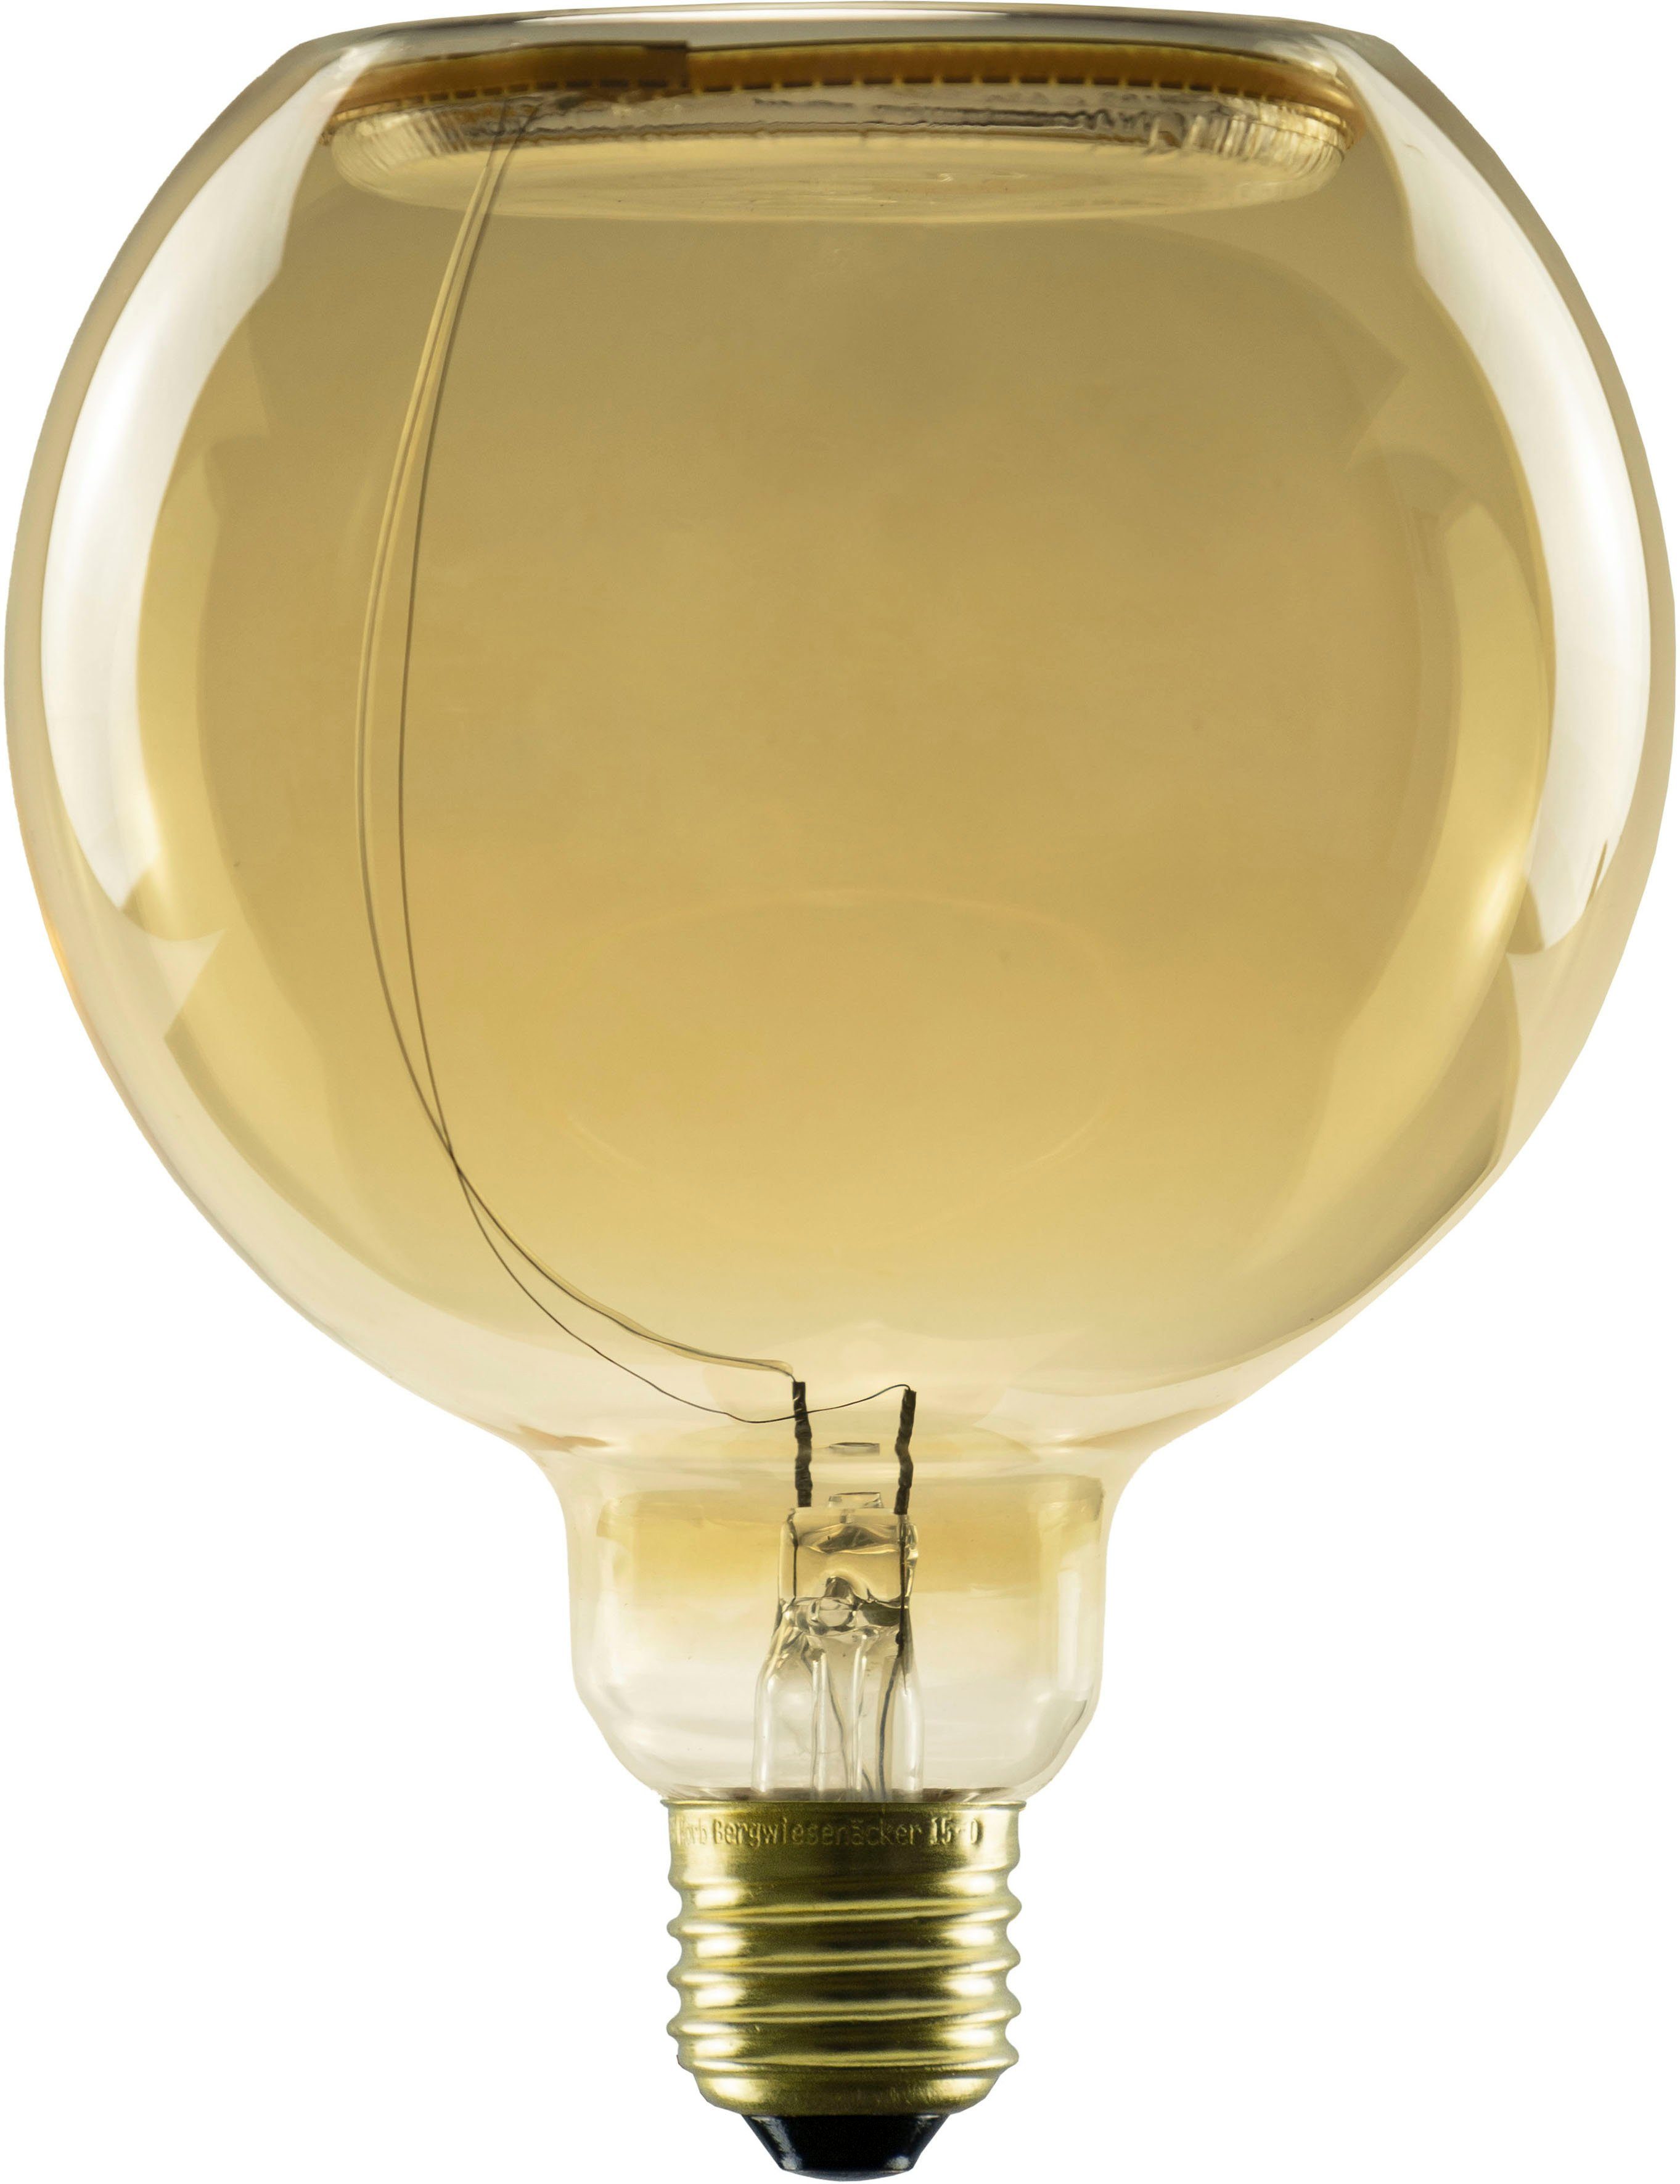 SEGULA LED-Leuchtmittel LED Floating Globe 125 gold, E27, 1 St., Extra-Warmweiß,  LED Floating Globe 125 gold, E27, 4W, CRI 90, dimmbar, Aussenbereich